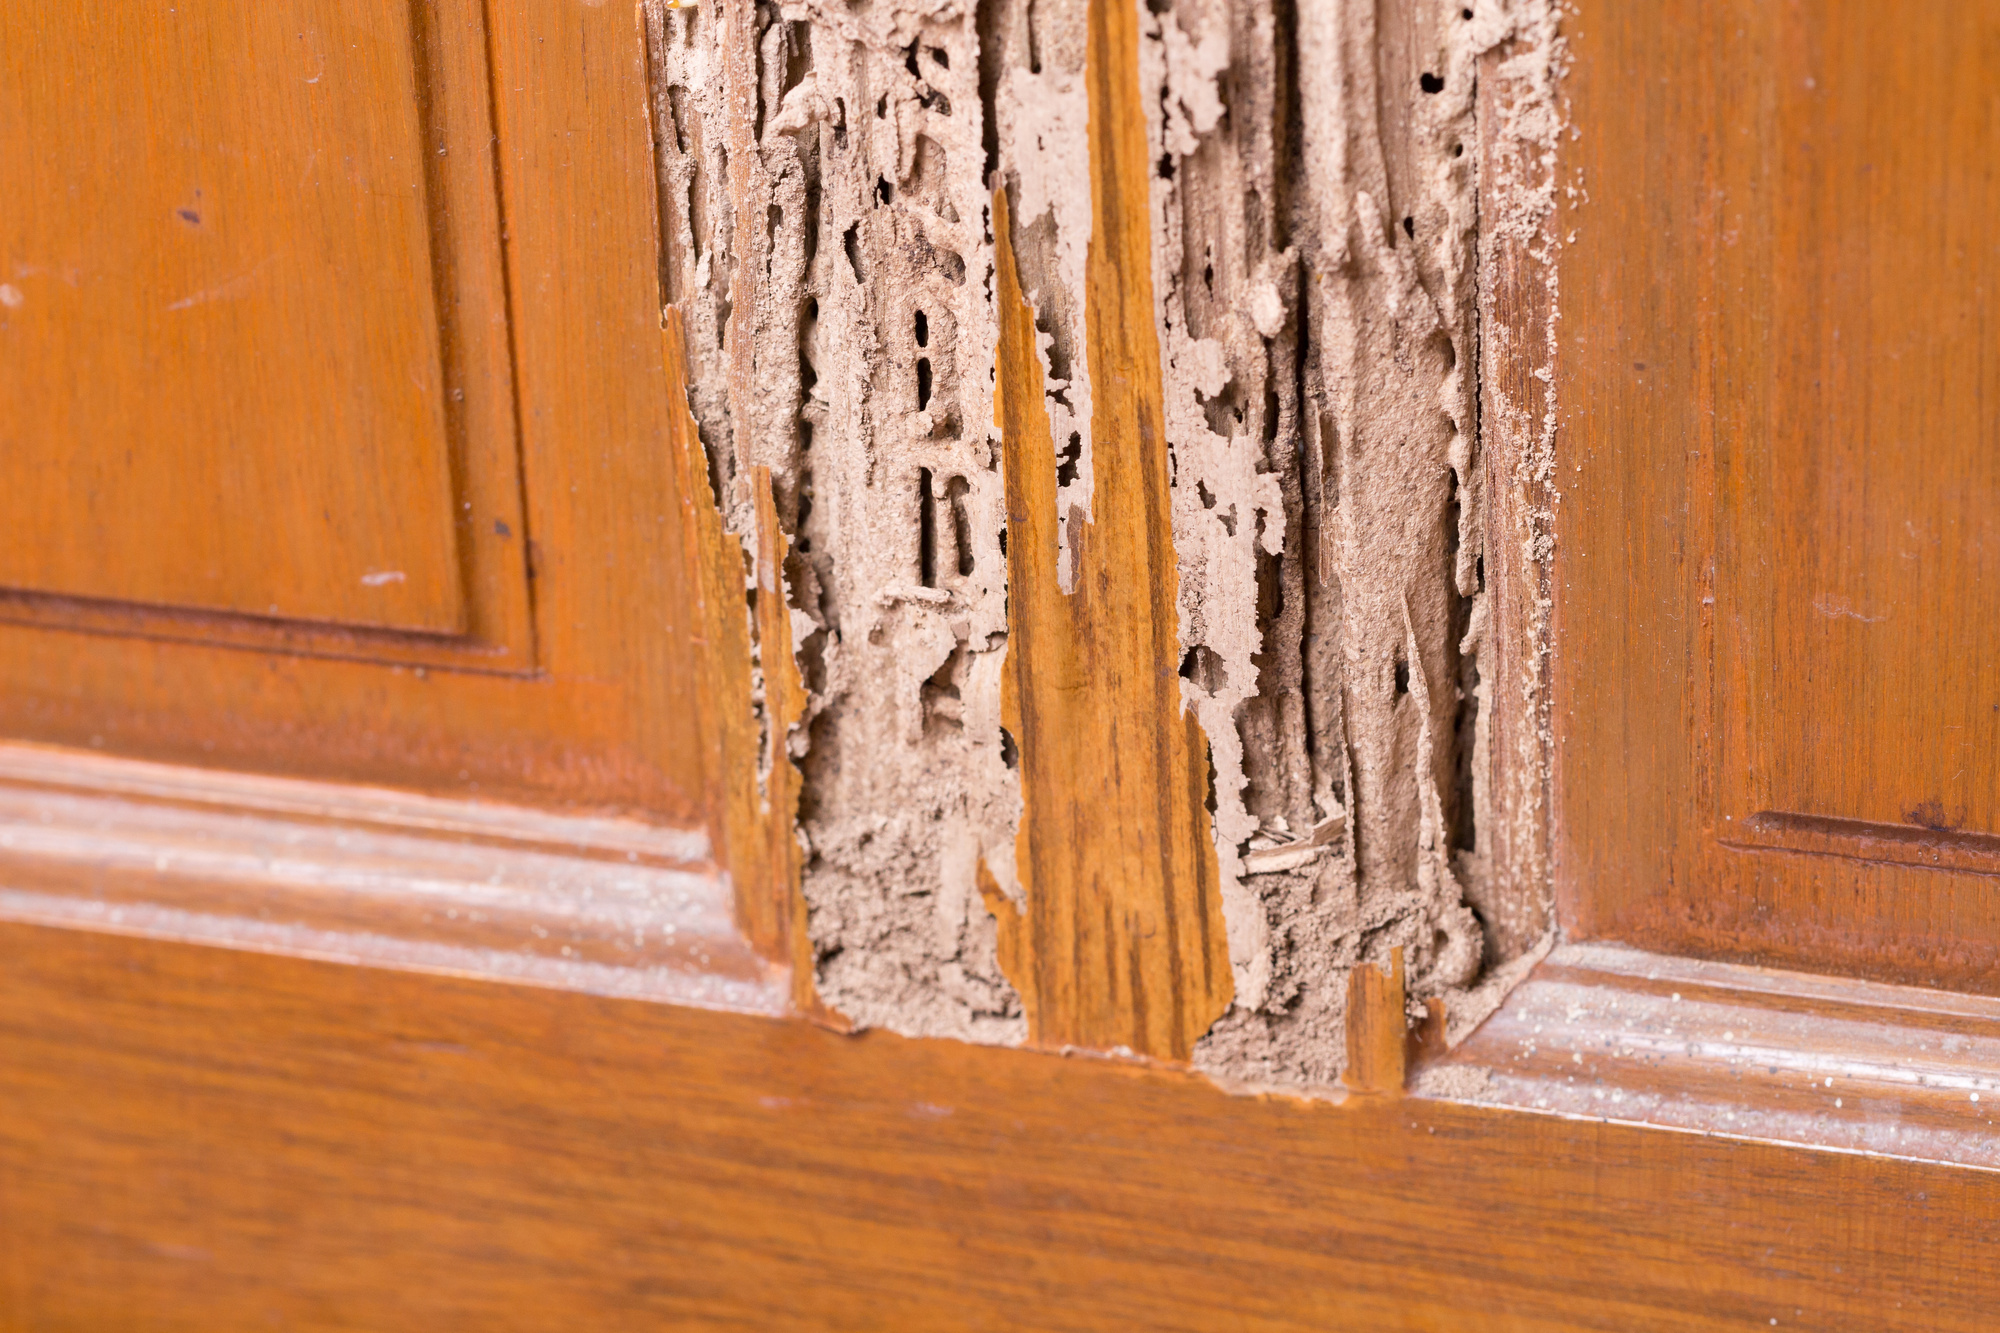 How Do Termites Damage Wood?